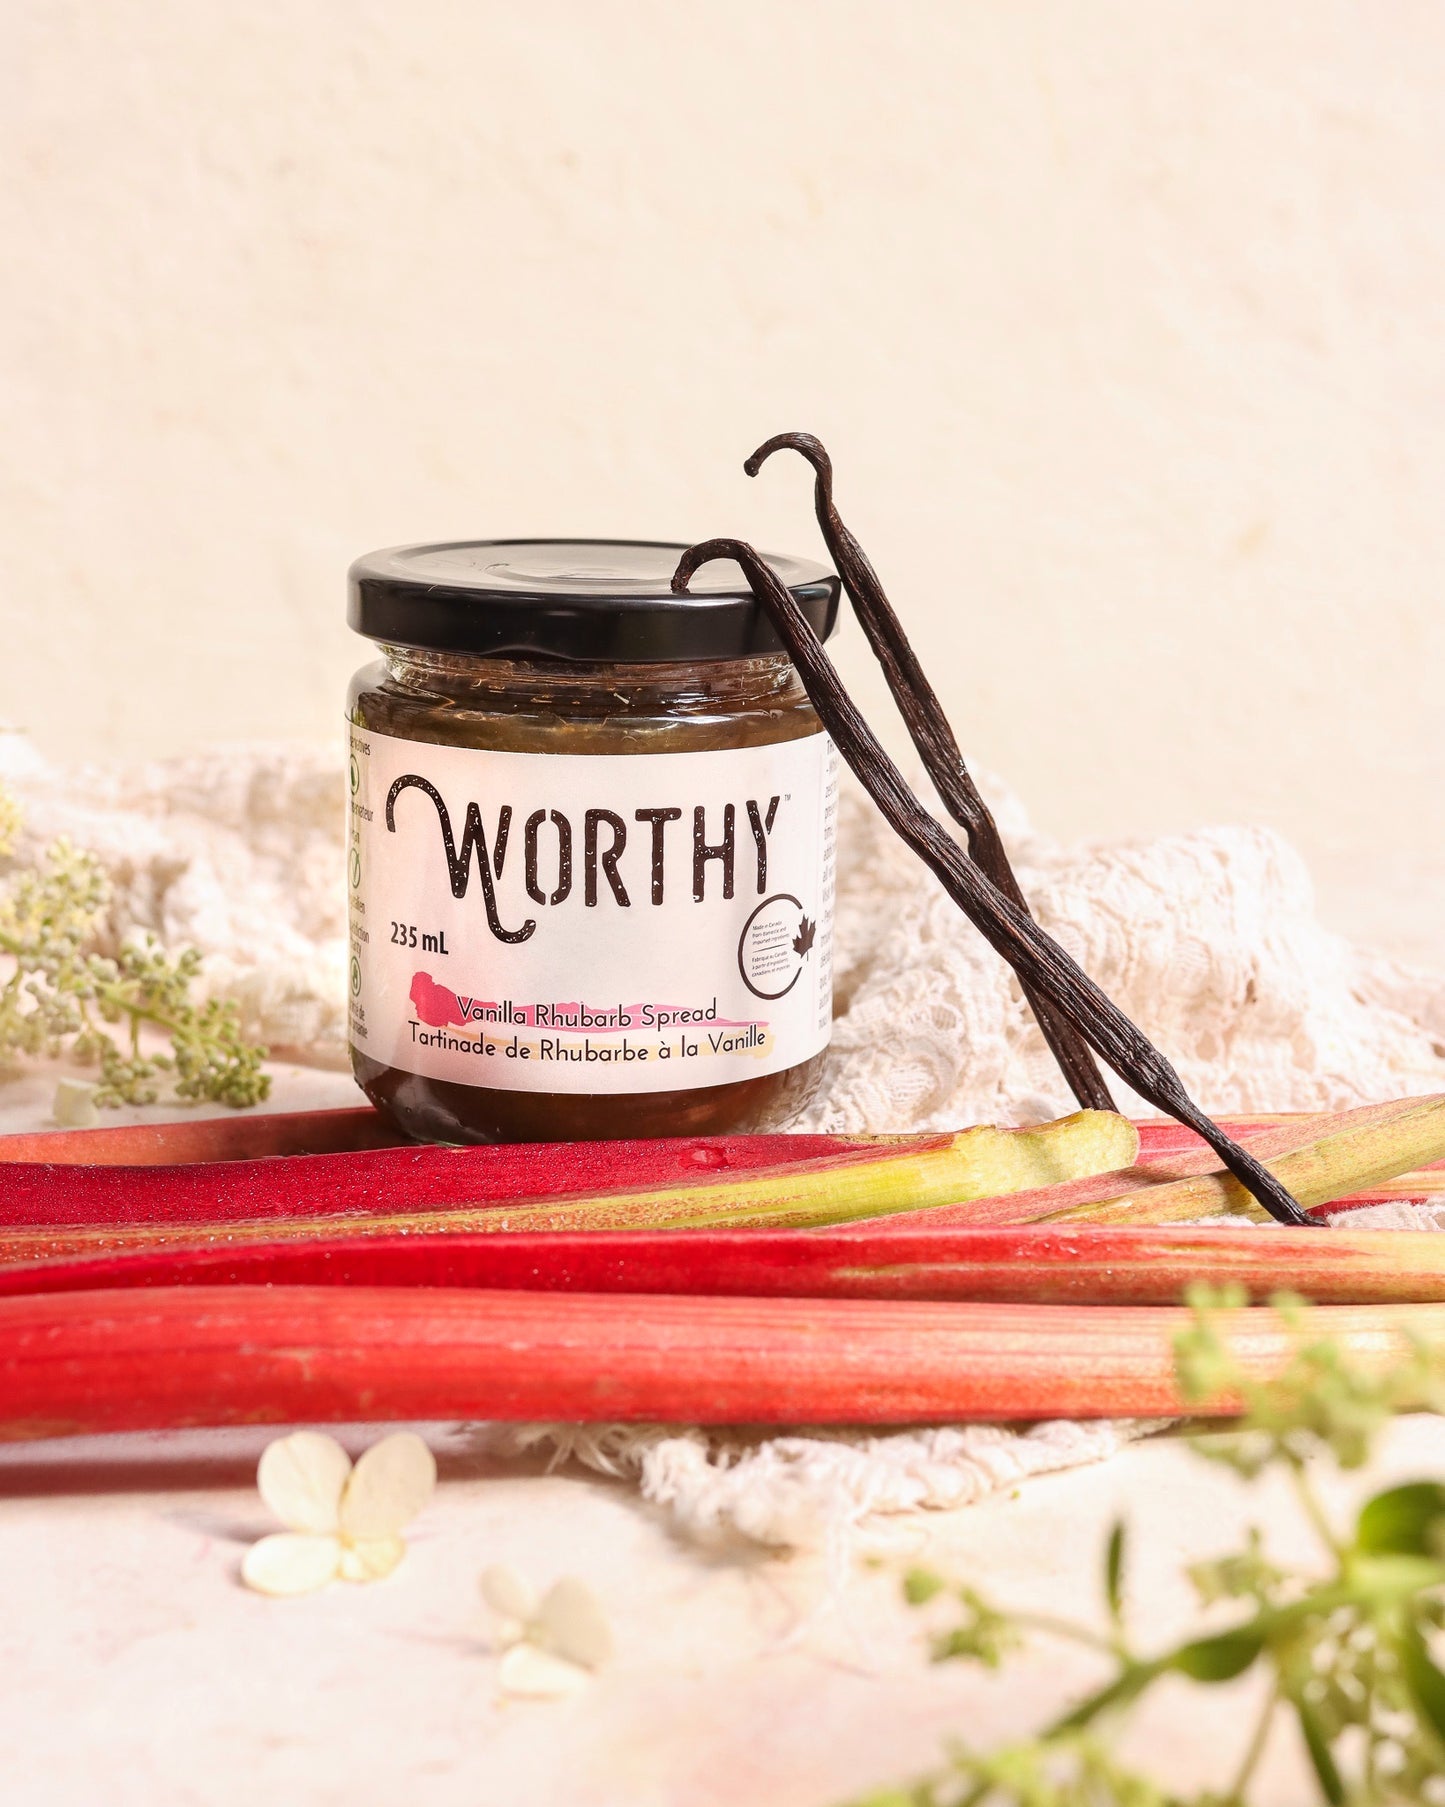 Worthy's Vanilla Rhubarb Spread